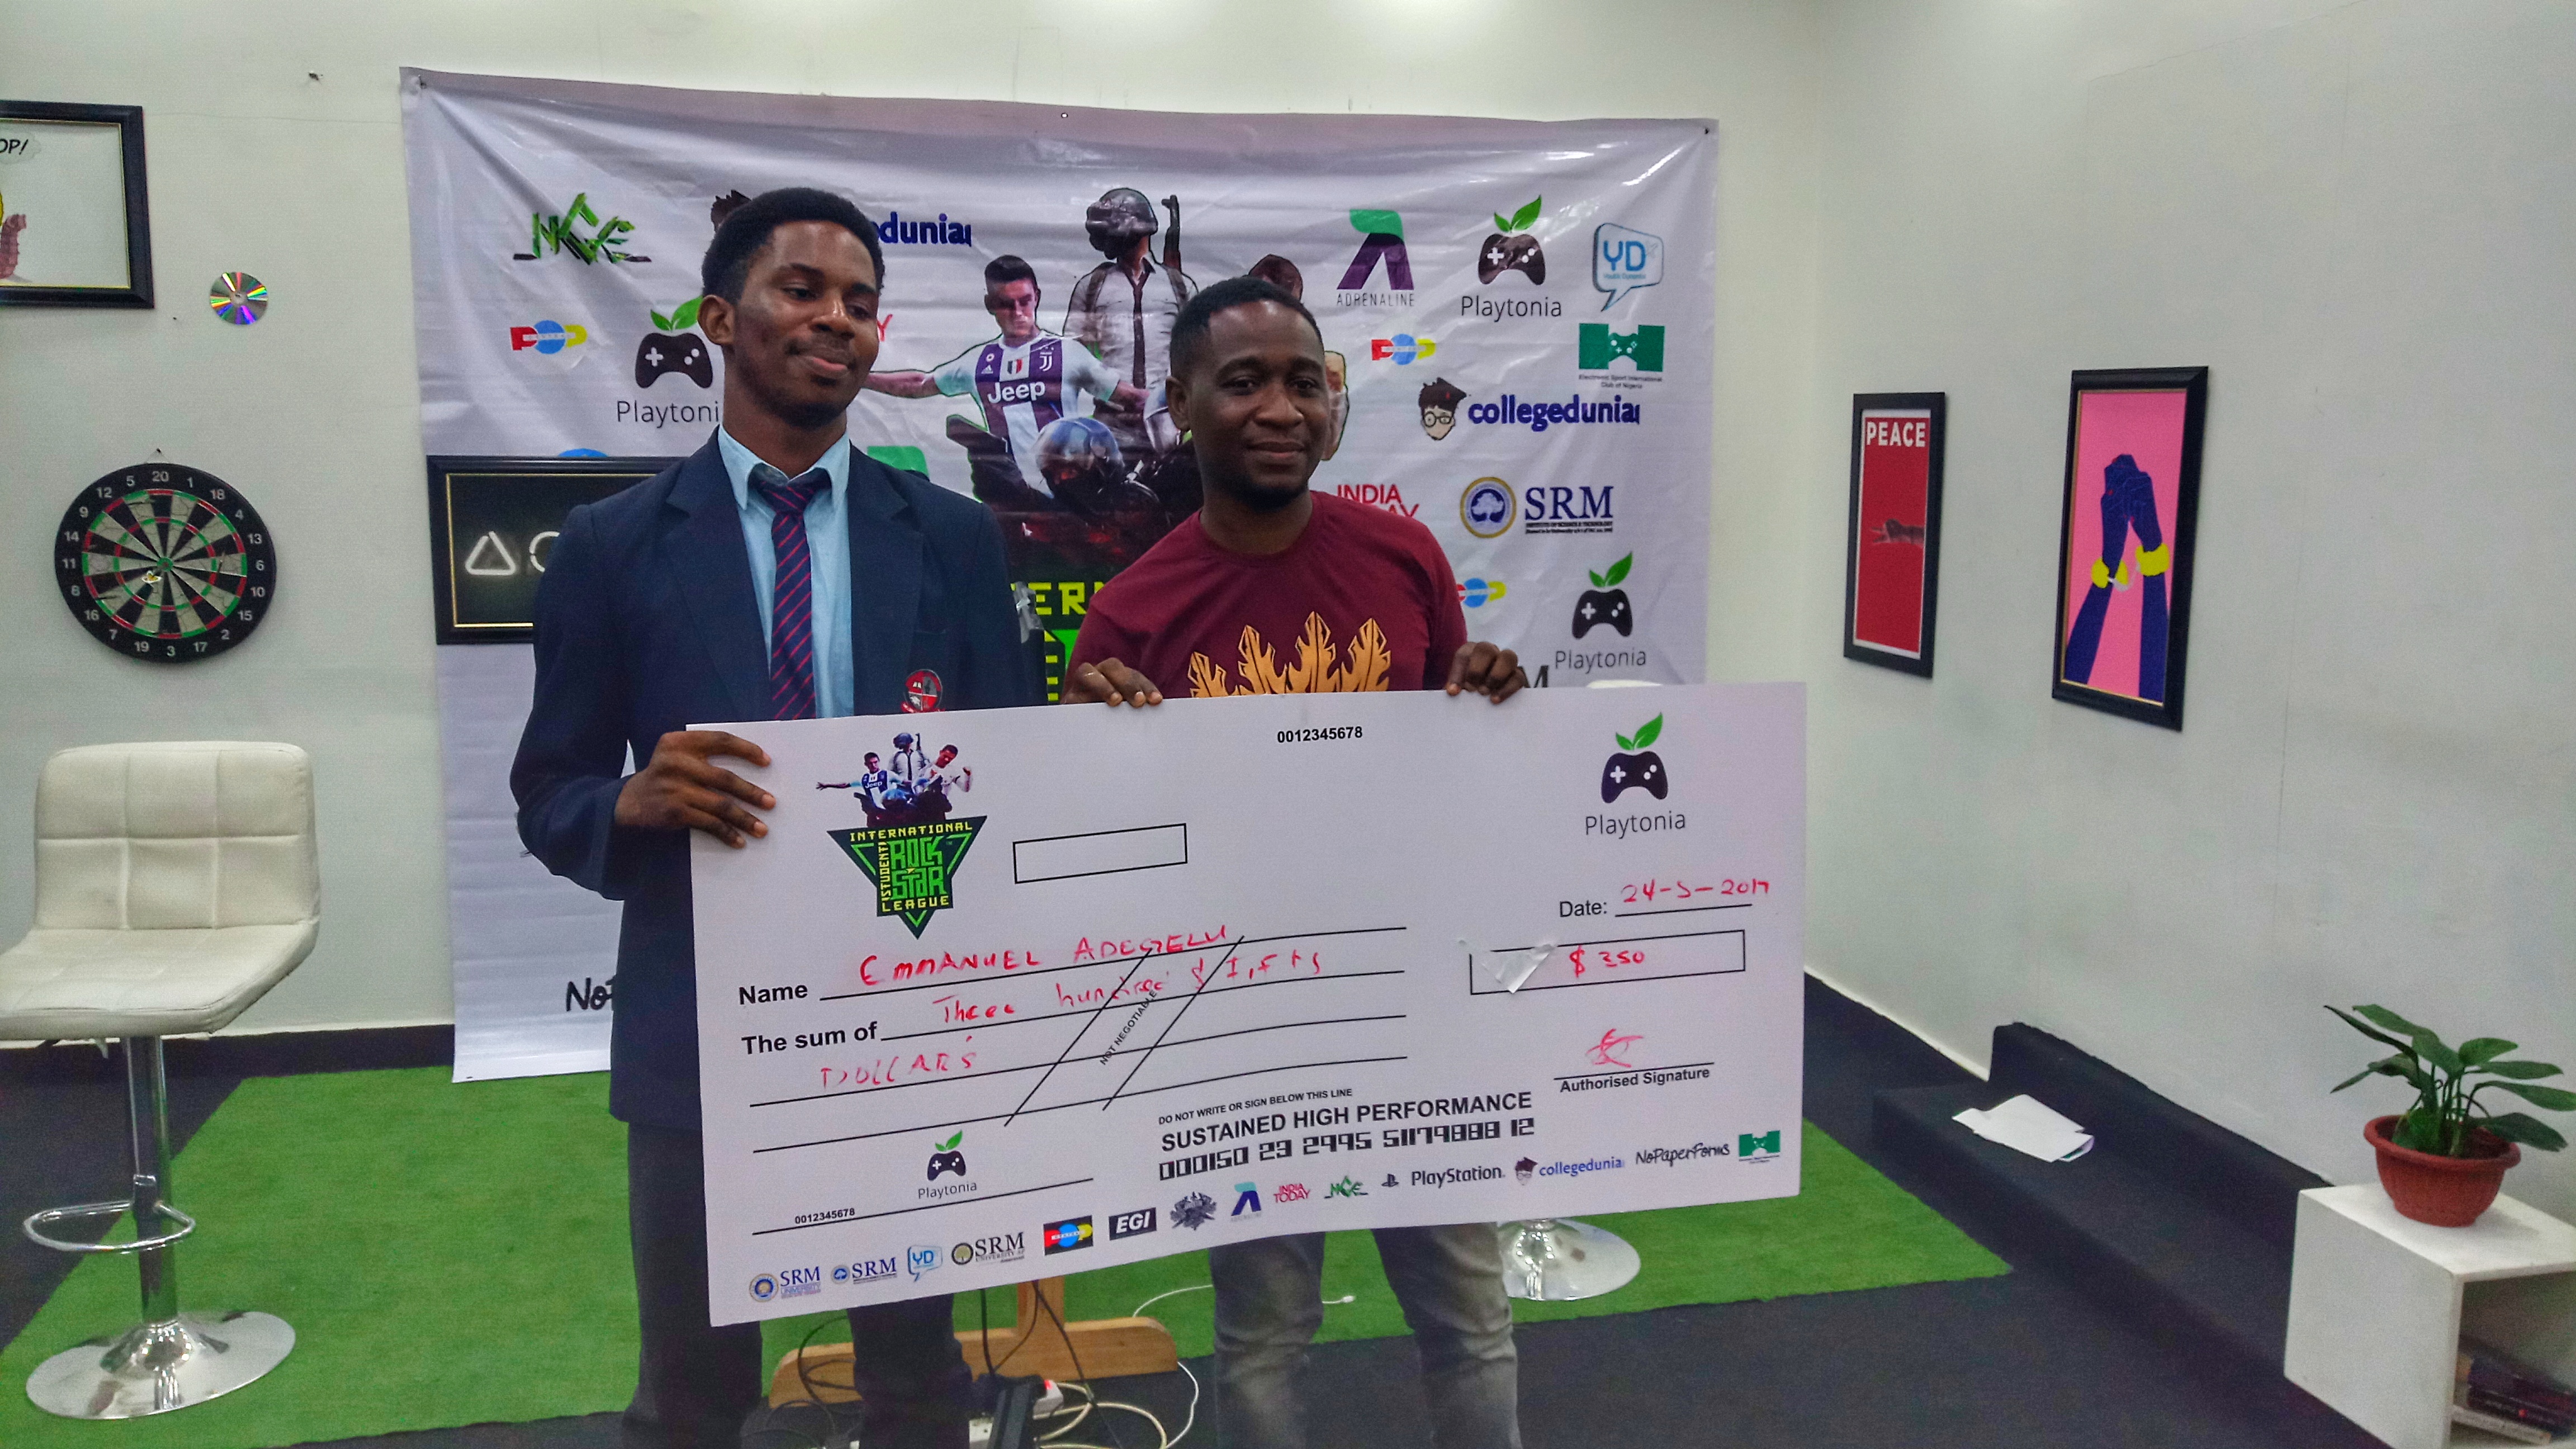 IMG 20190524 173137 5 01 - International Student Rockstar League Holds Nigerian Qualifiers.